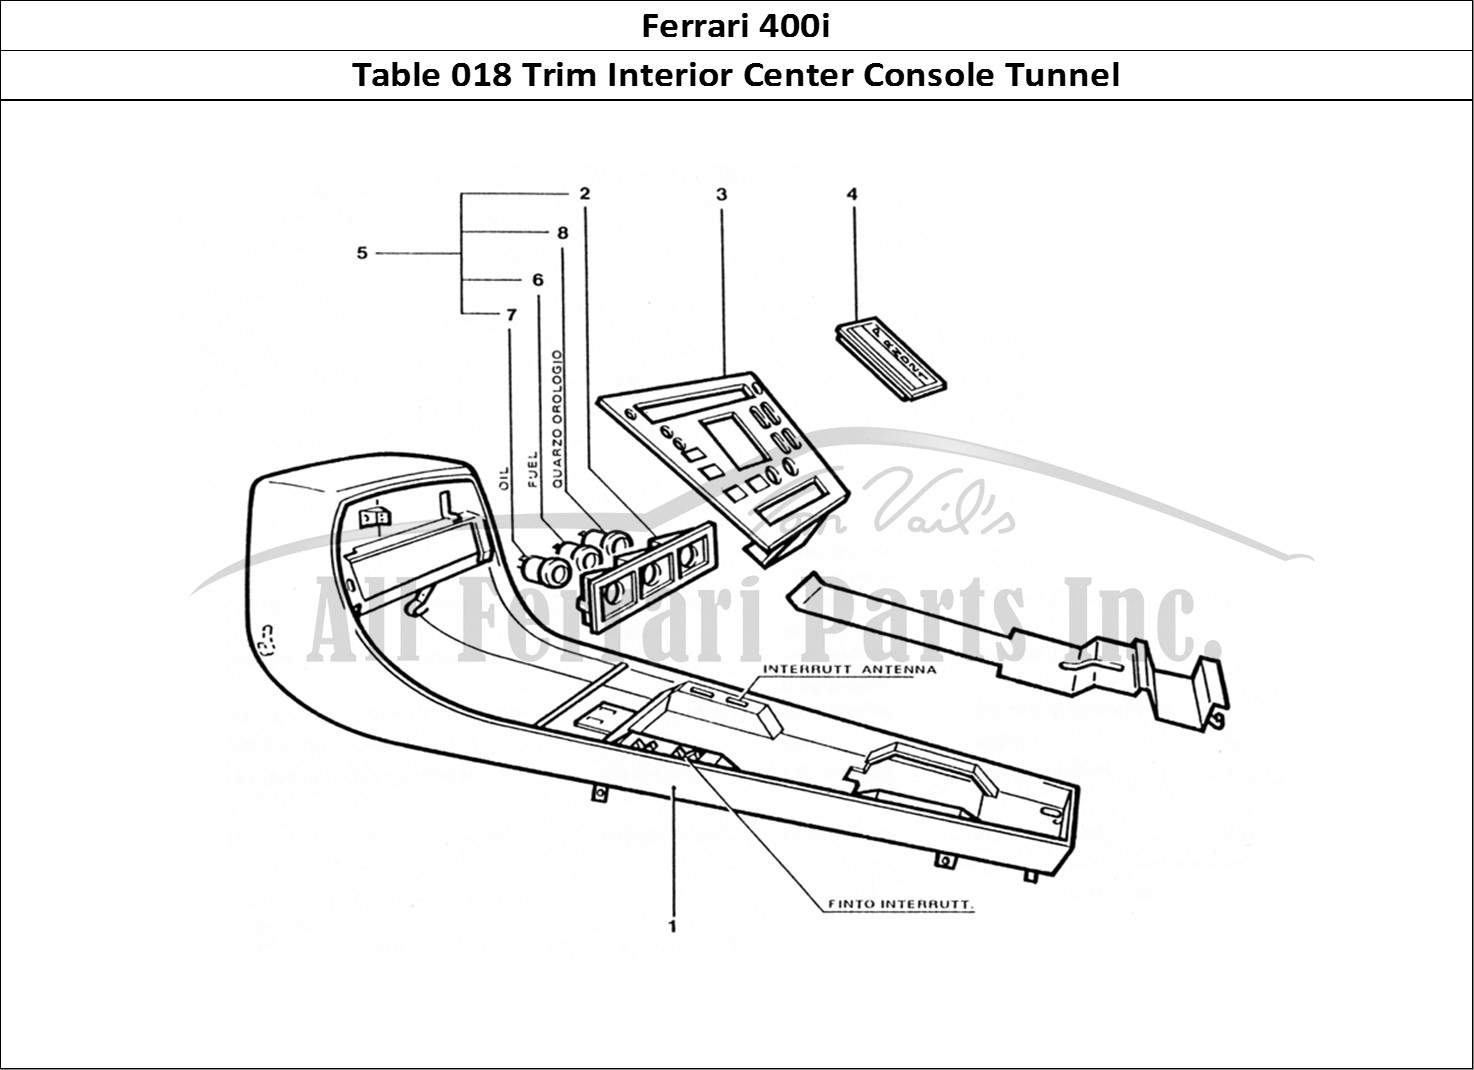 Ferrari Parts Ferrari 400 GT (Coachwork) Page 018 Inner center console pane